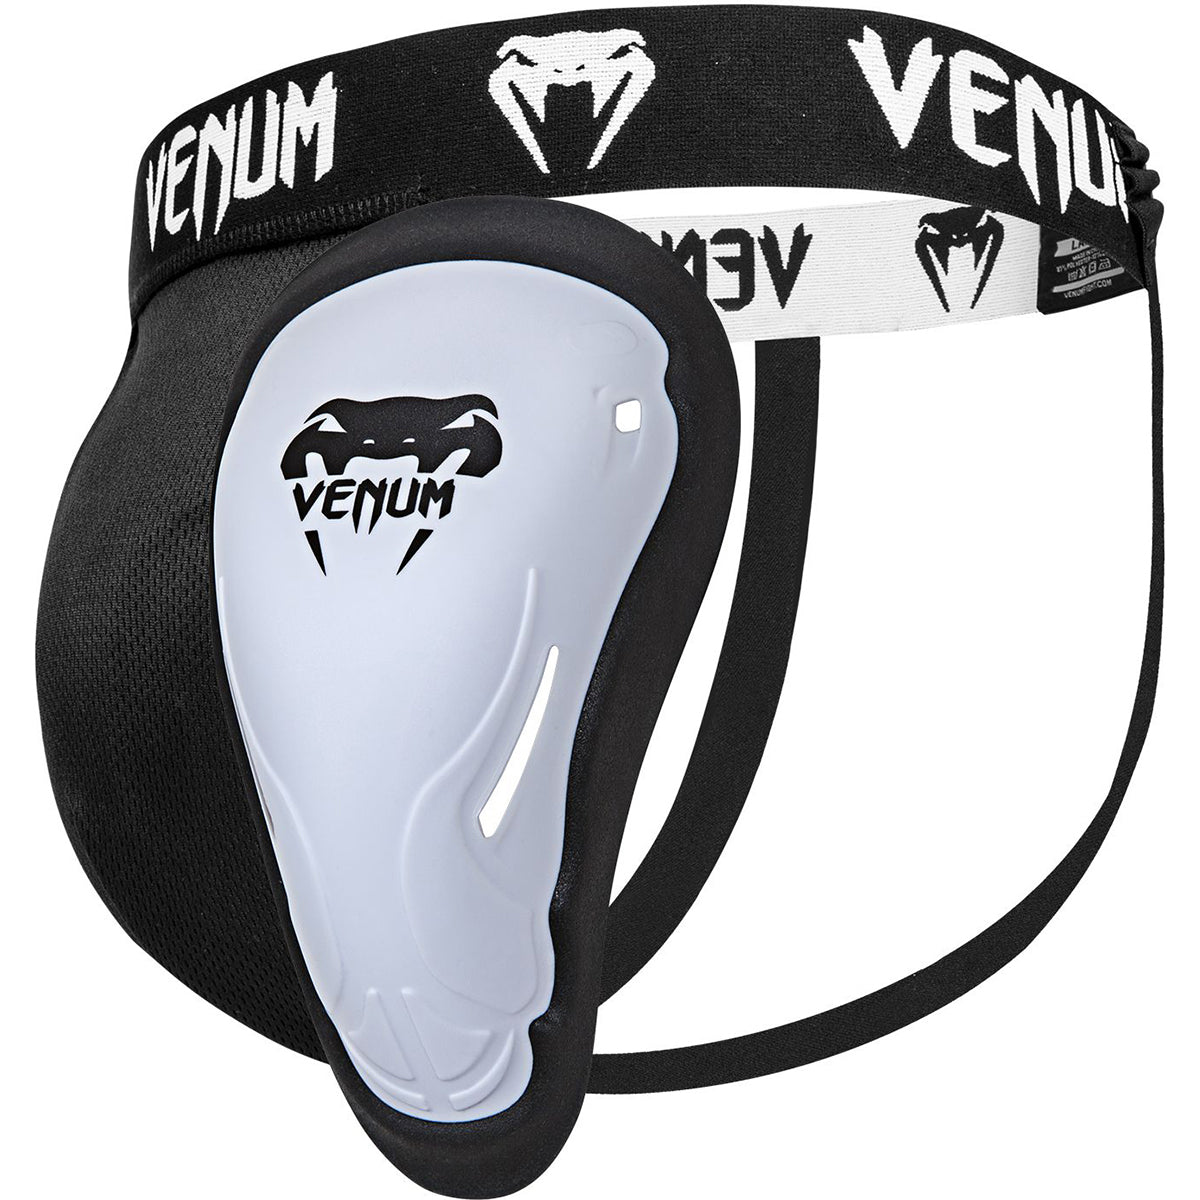 Venum Challenger Groin Guard and Support - Black/White Venum